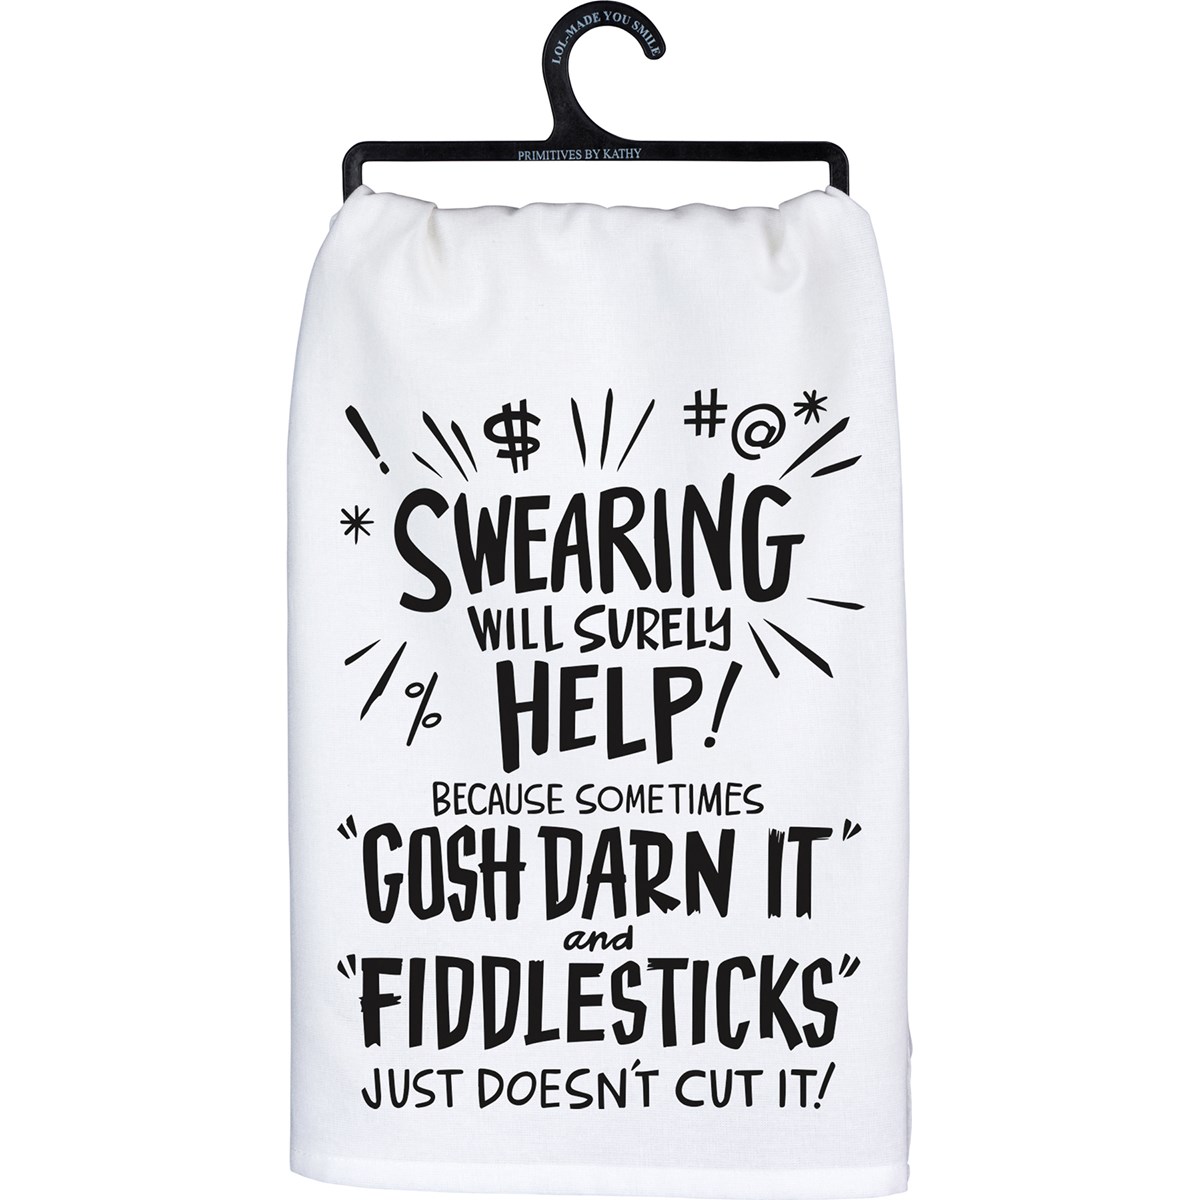 Fiddlesticks Just Doesn't Cut It Kitchen Towel - Cotton